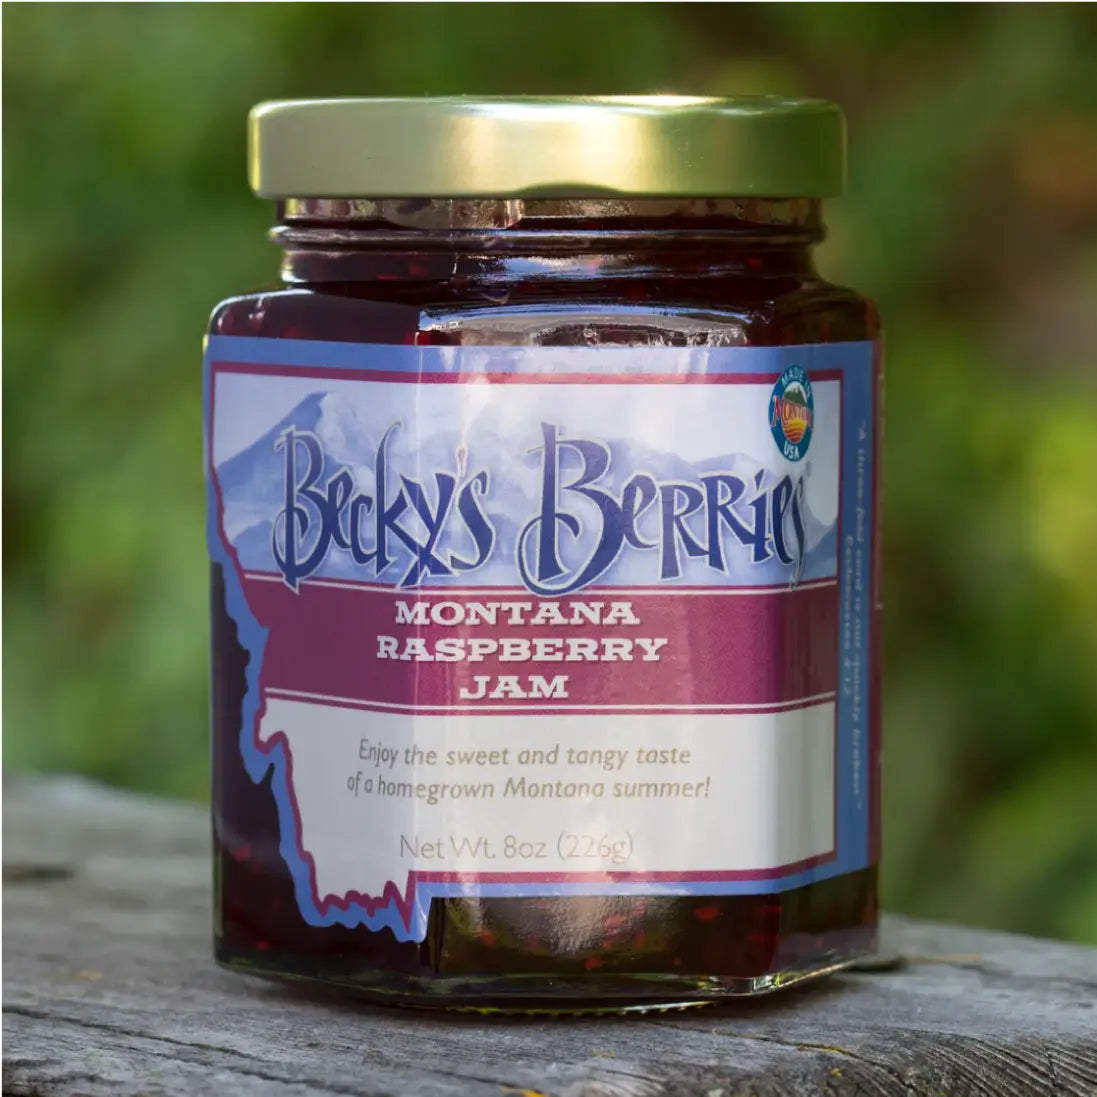 Becky’s Berries - Montana Jam